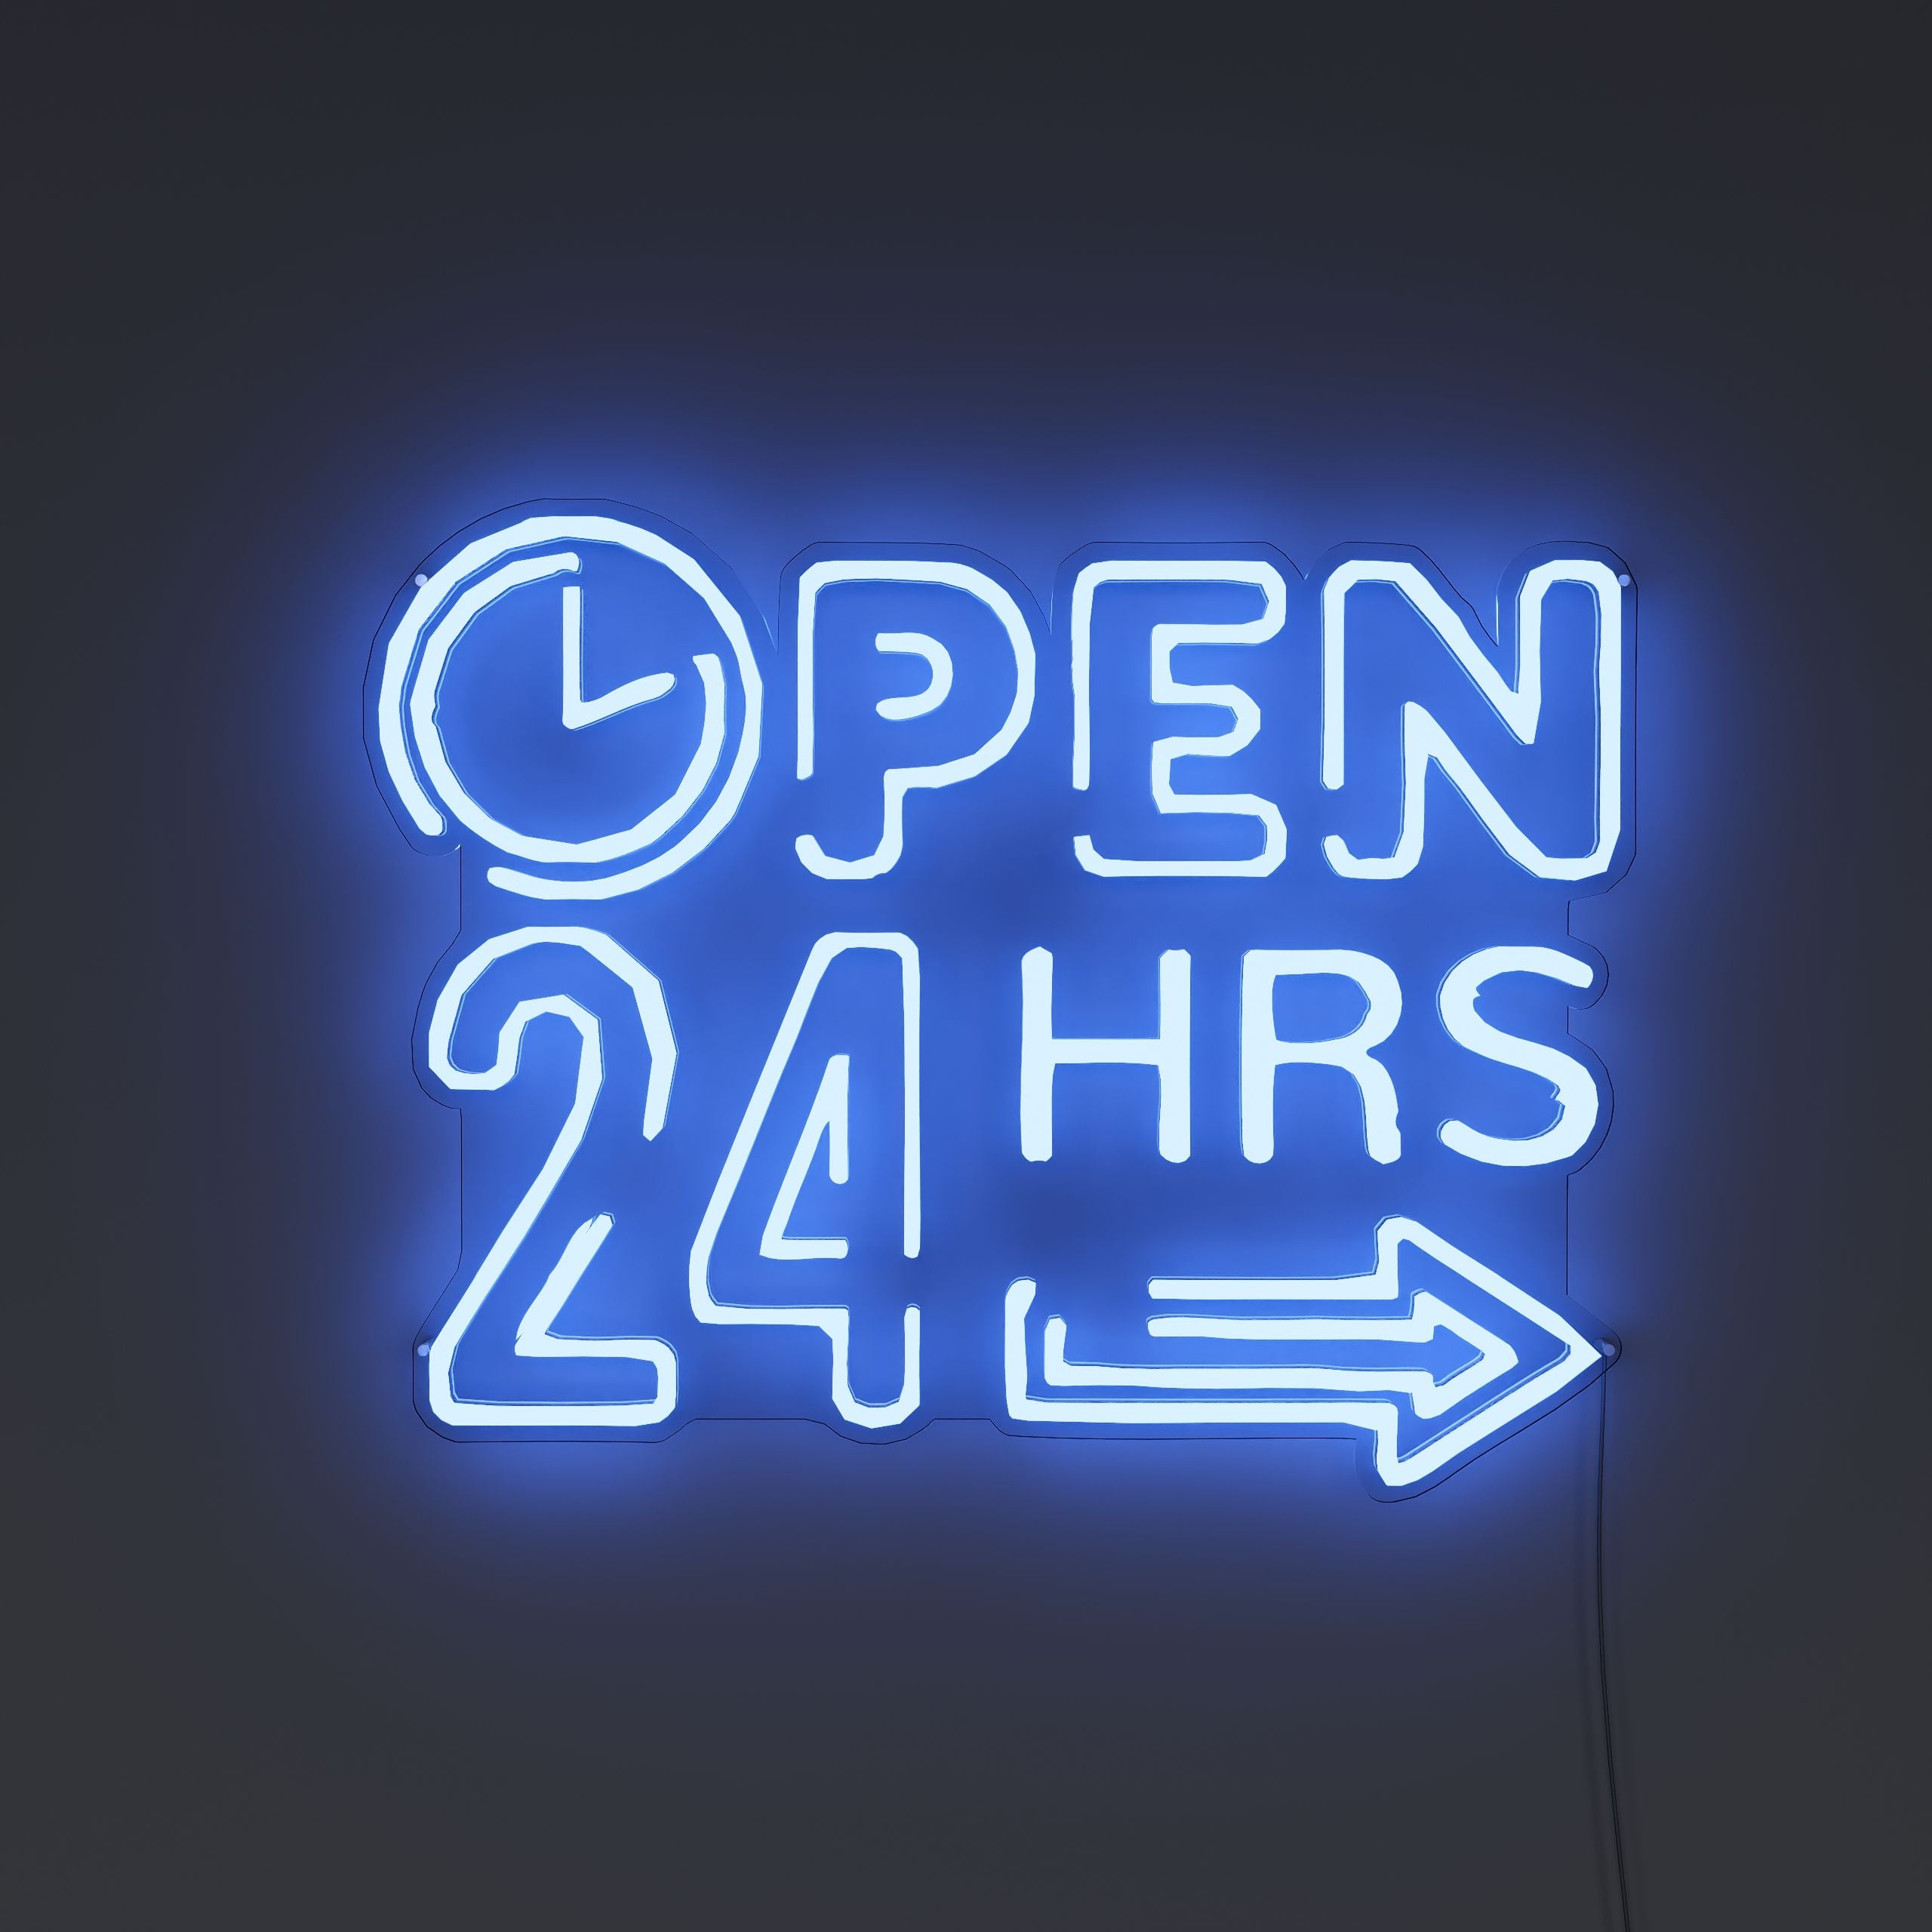 twenty-four-hour-service-neon-sign-lite